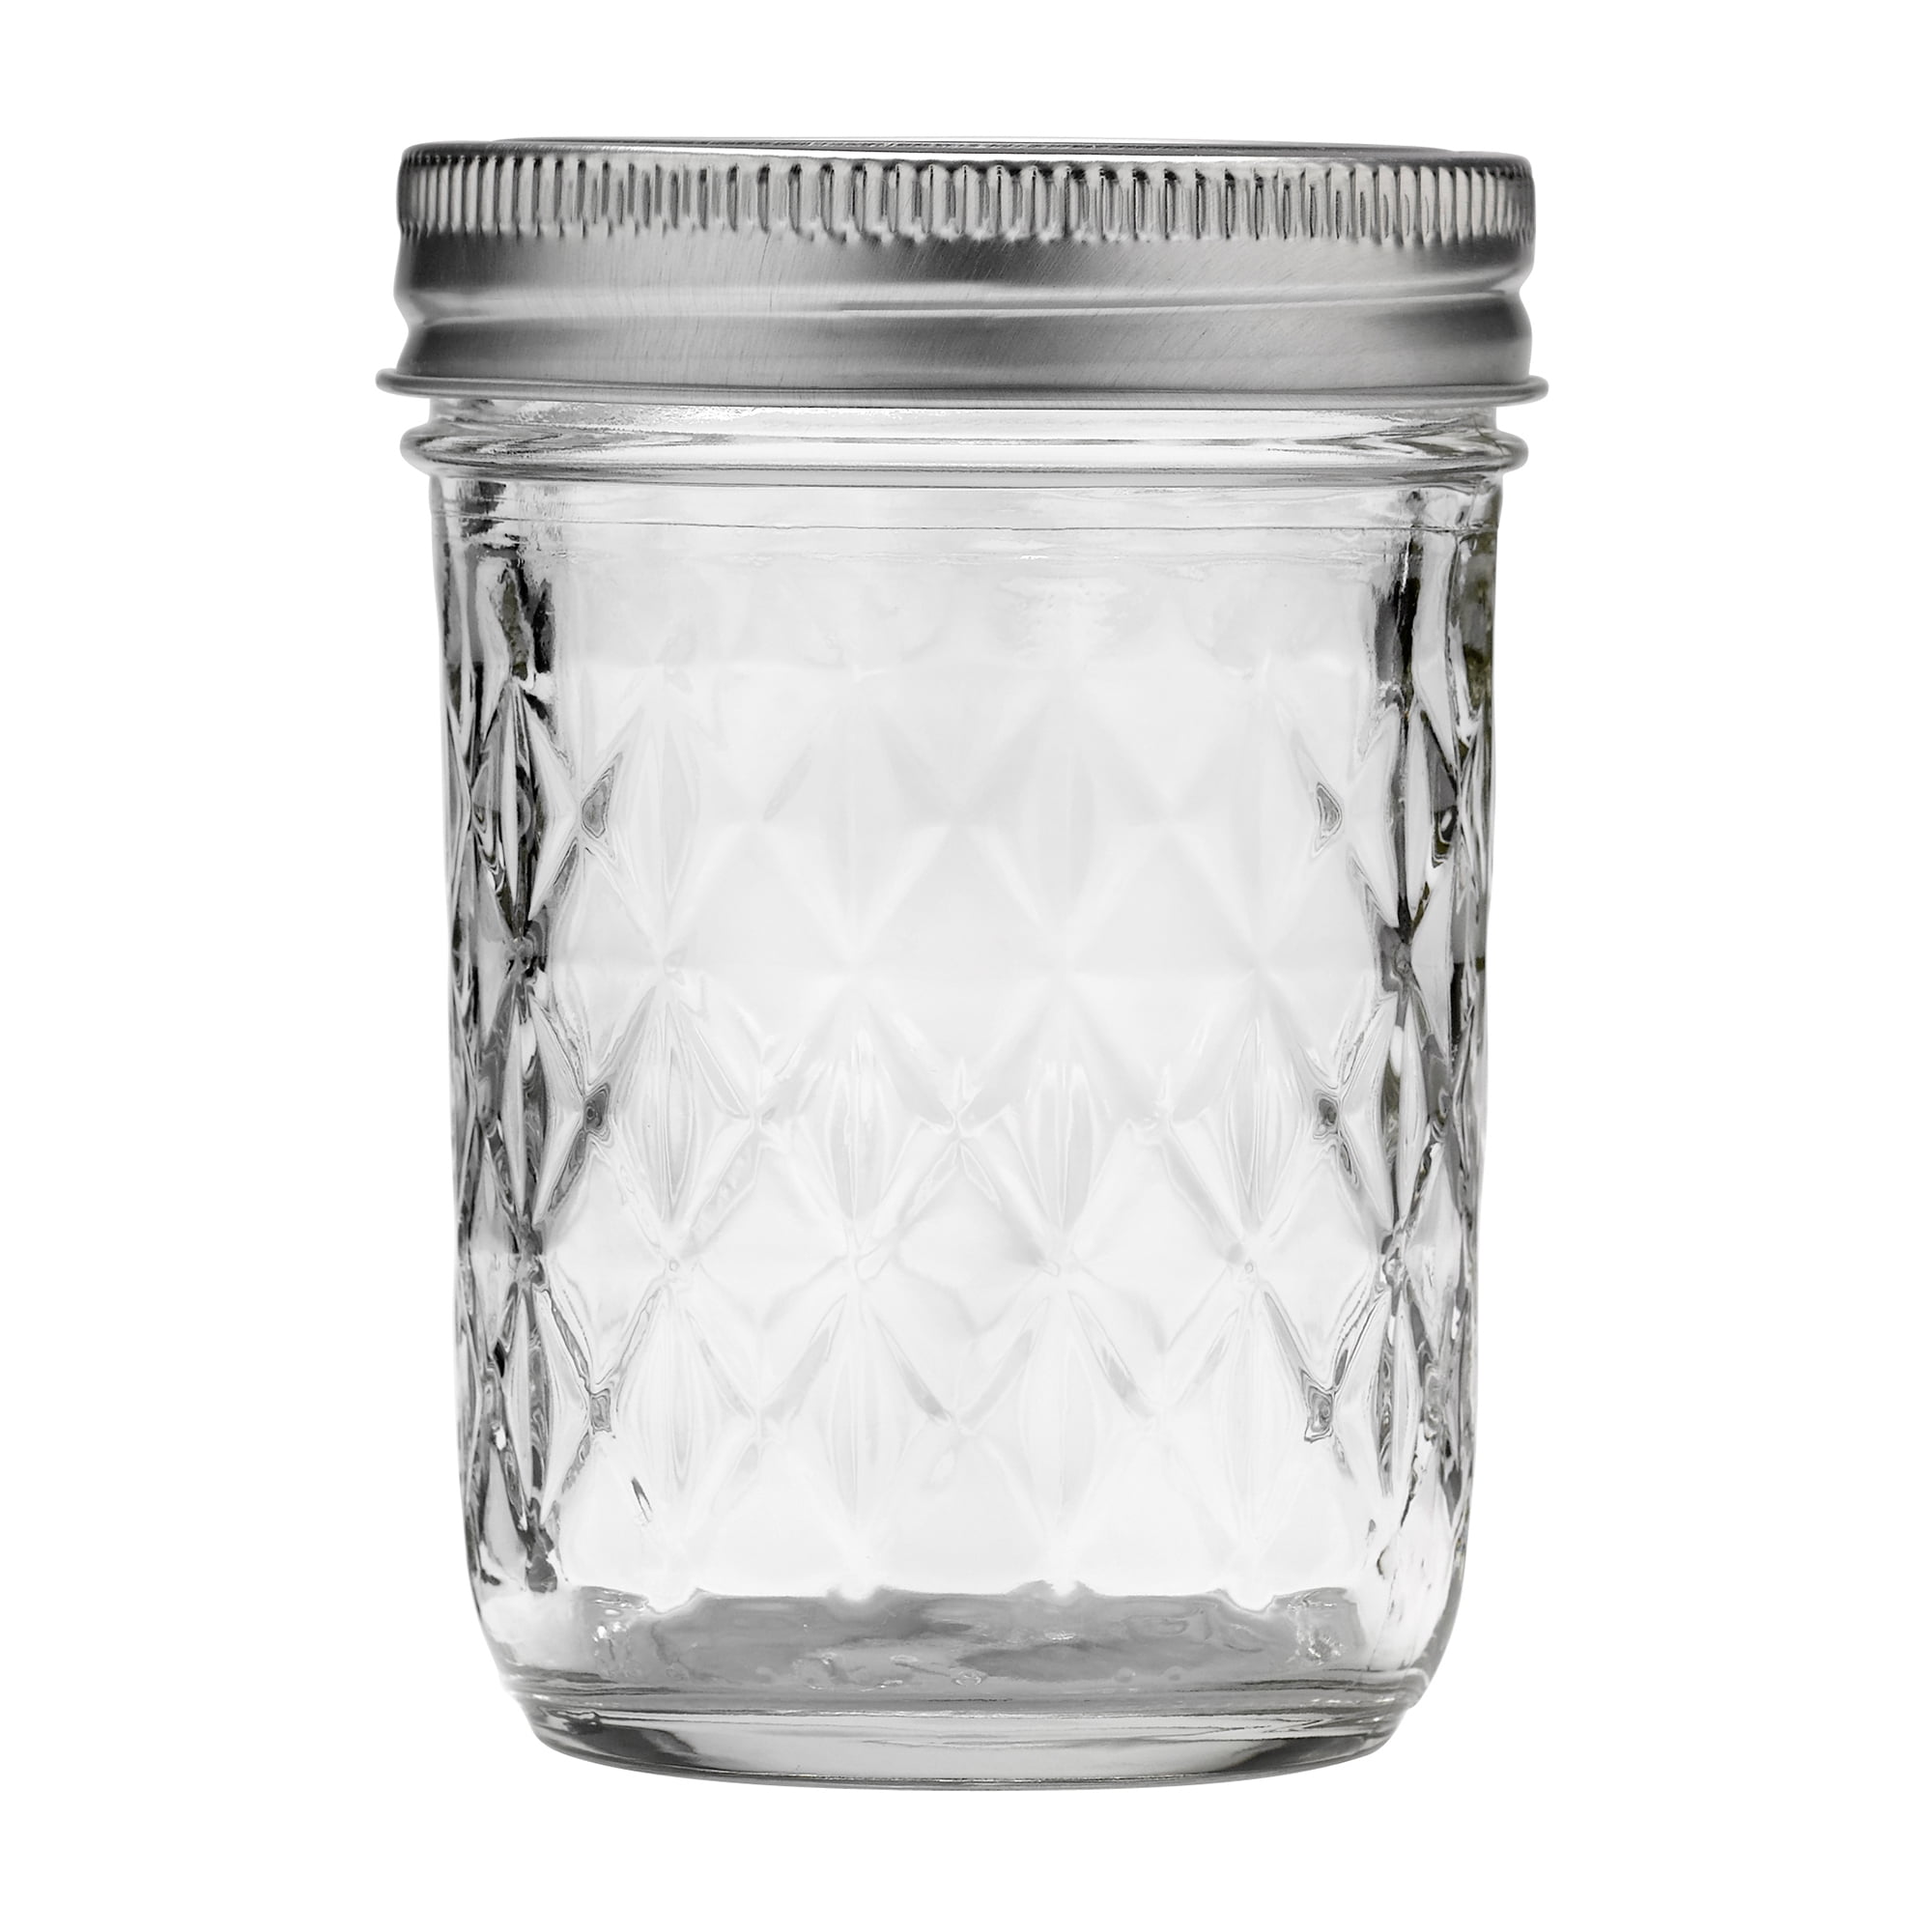 Wholesale Containers: 14 oz Mason Jars